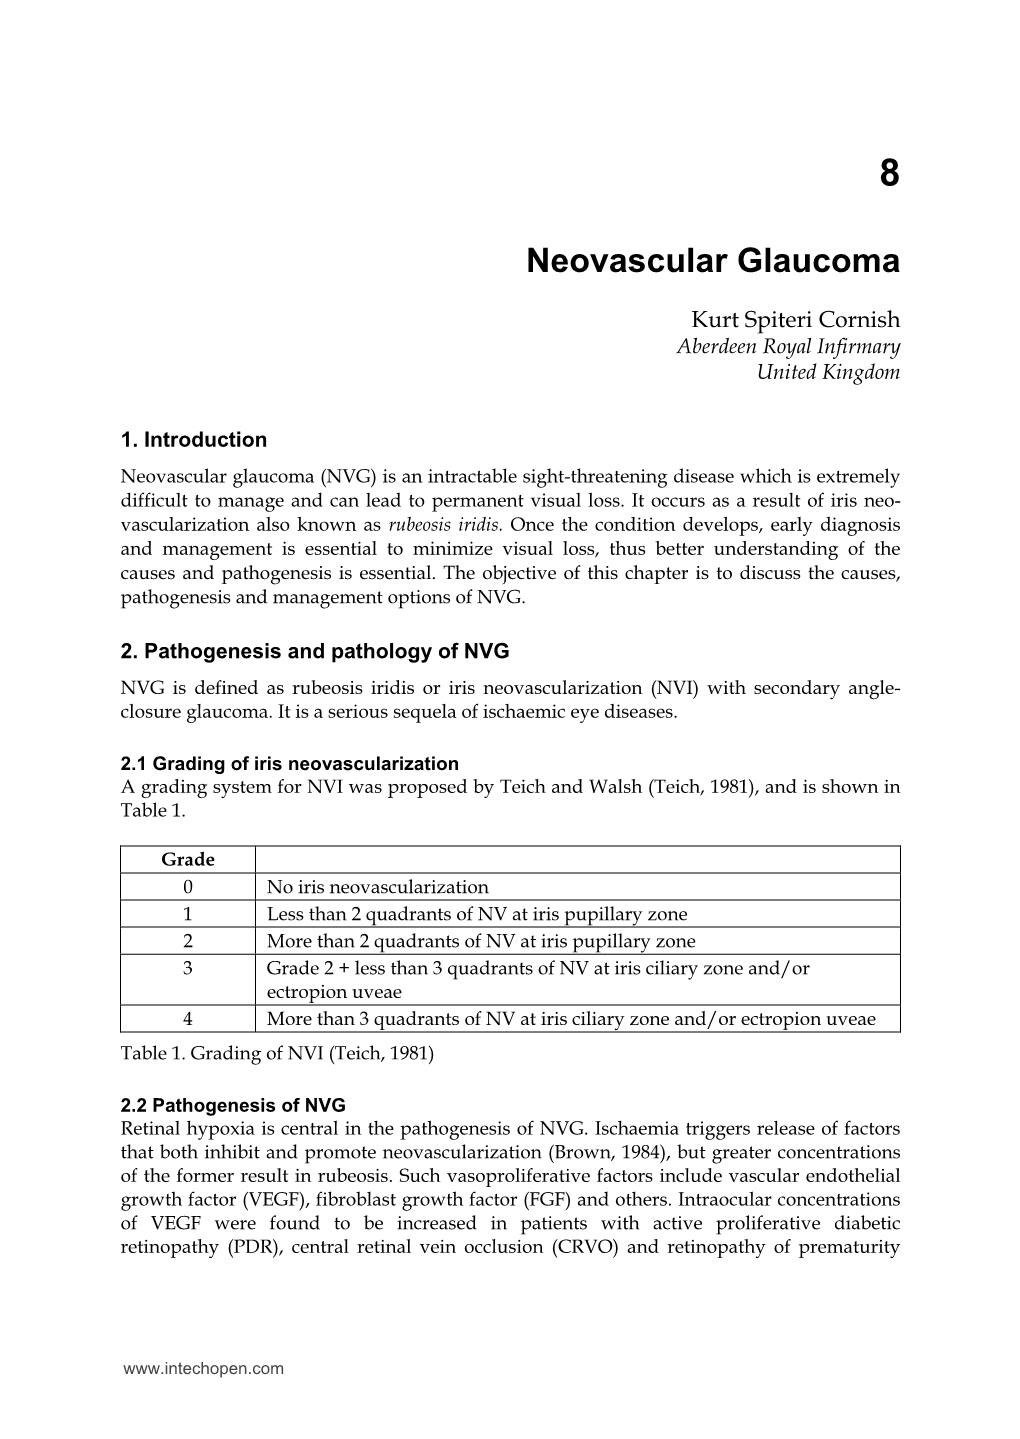 Neovascular Glaucoma